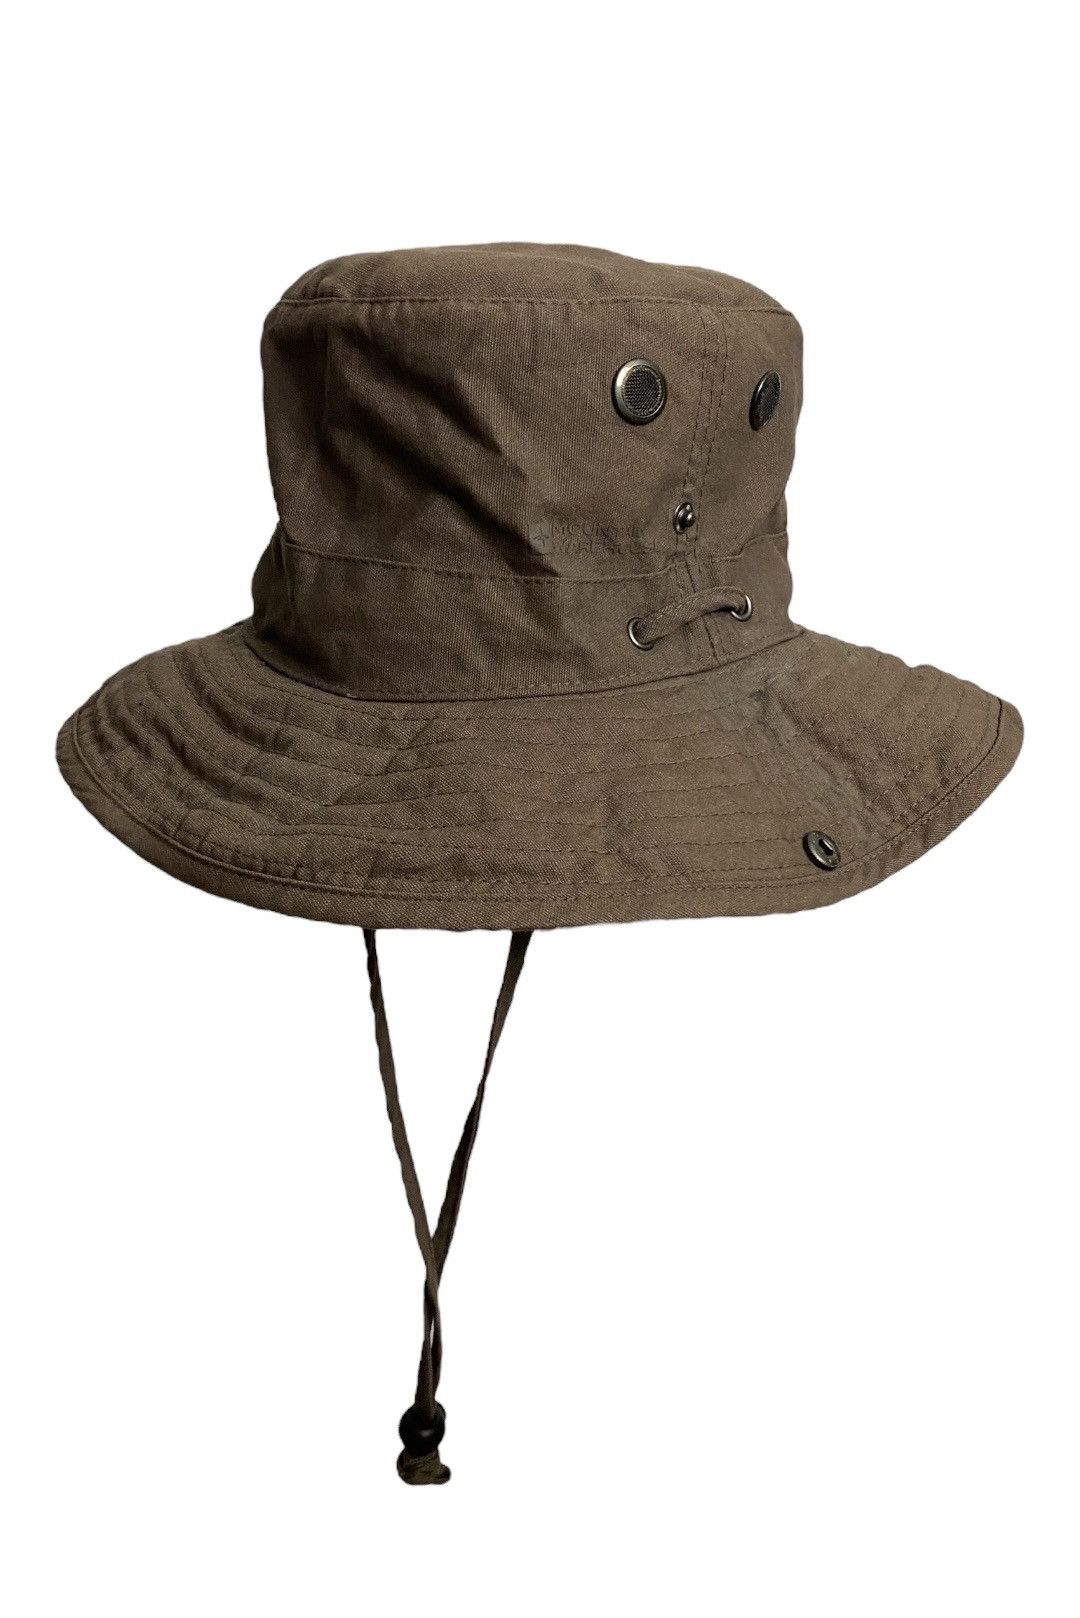 Vintage Vintage The North Face Outdoor Bucket Hat Panama